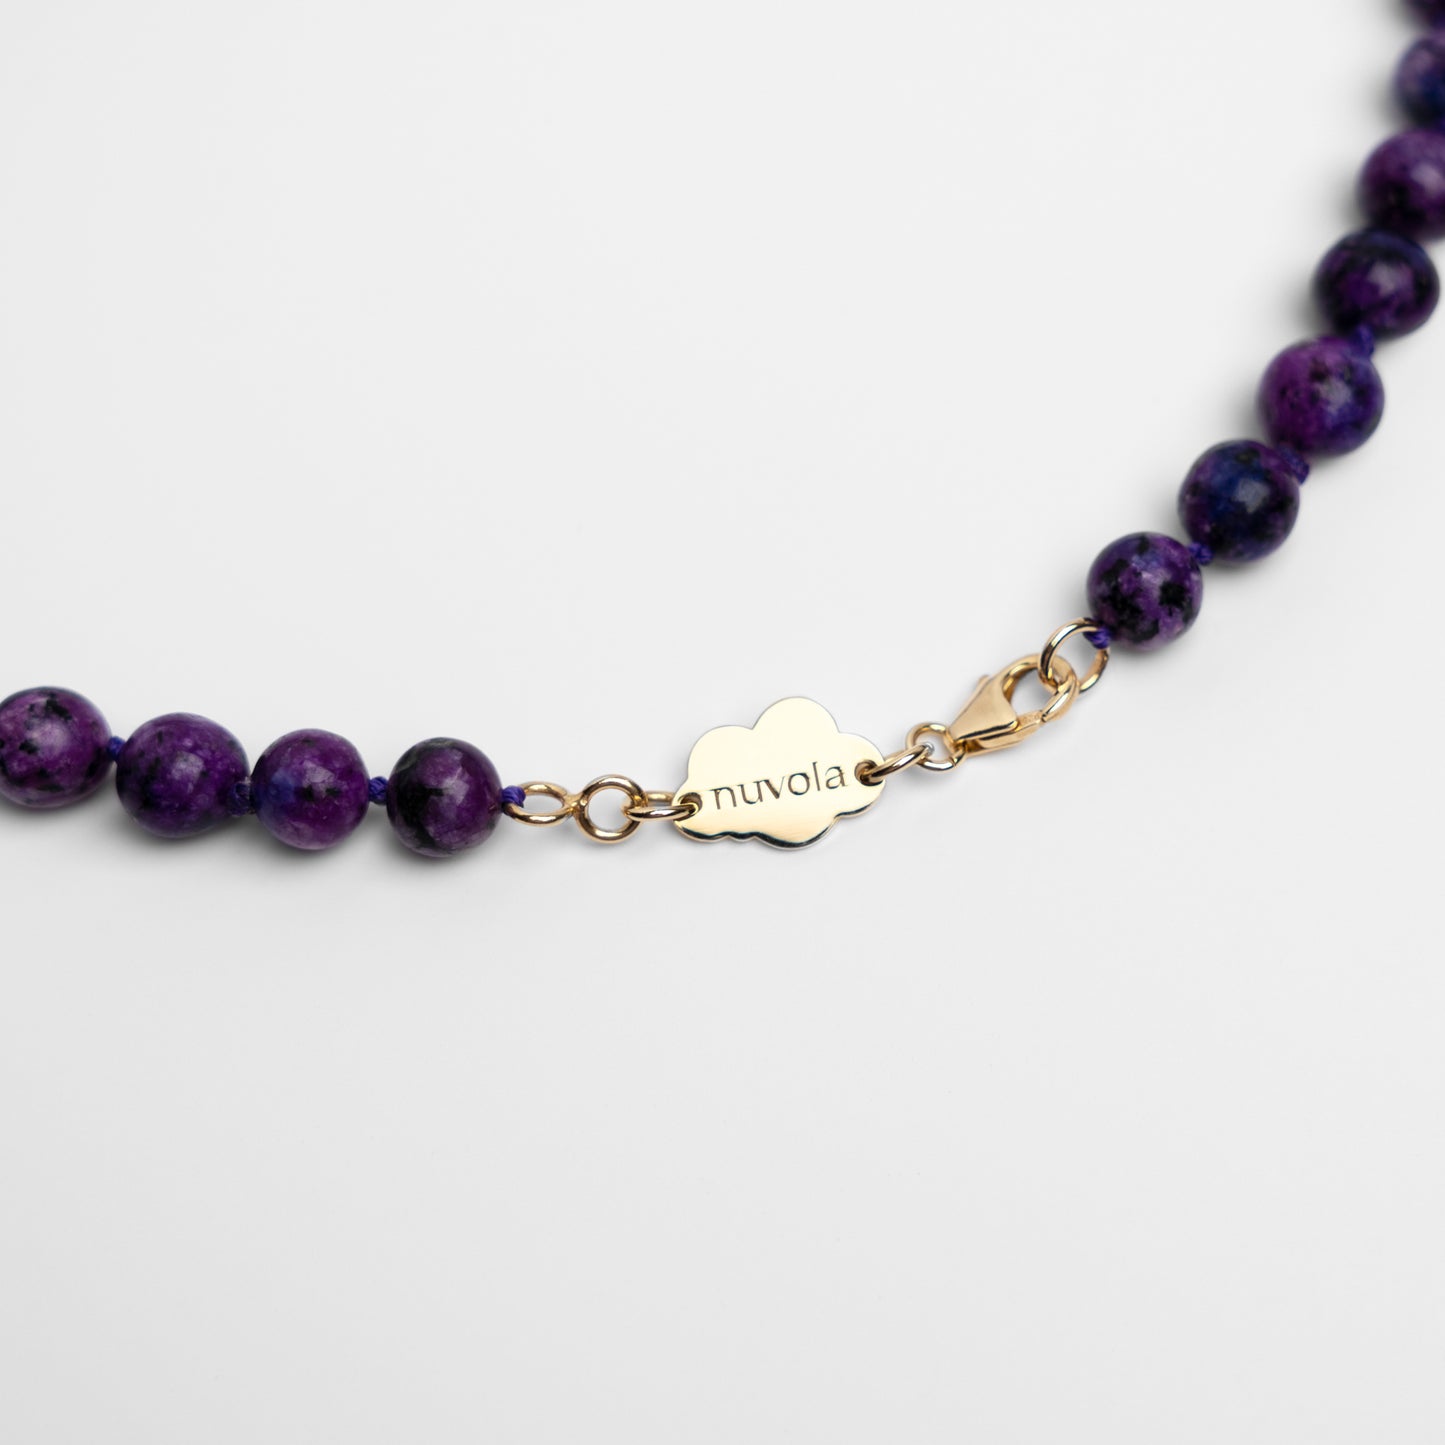 Purple agate necklace